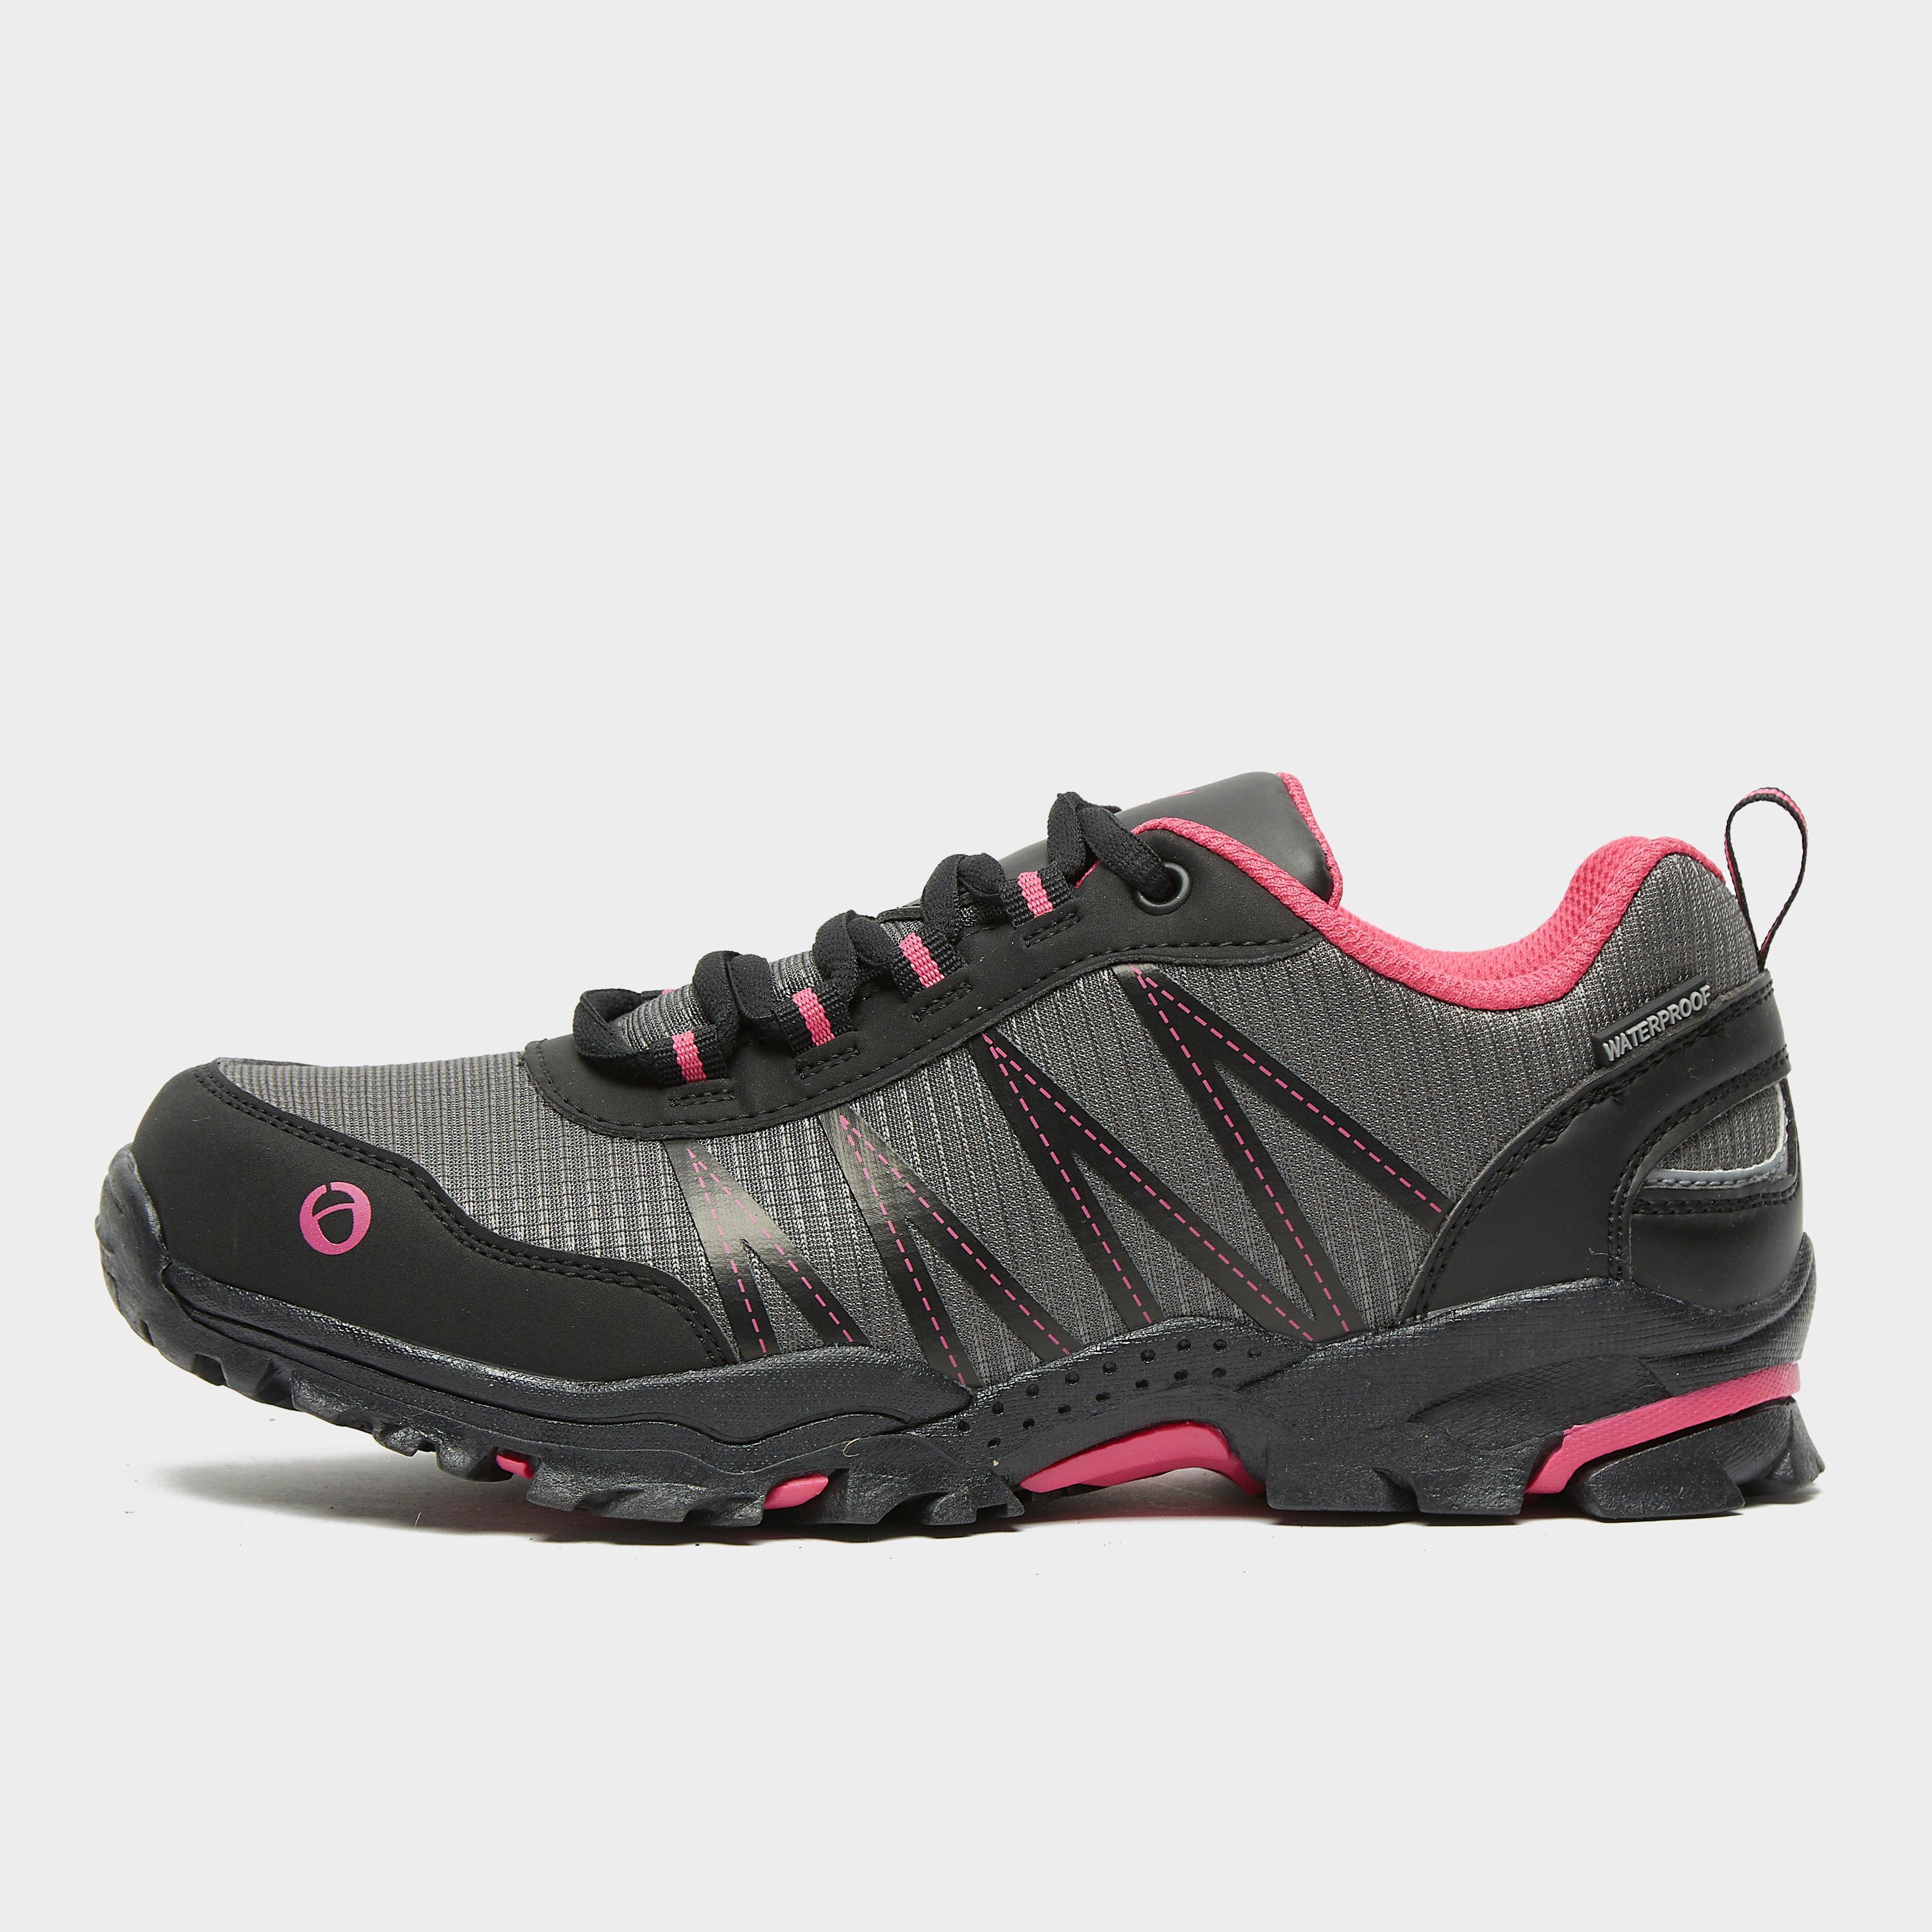 Image of Cotswold Kids' Littledean Waterproof Walking Shoes - Grey/Pink, Grey/Pink